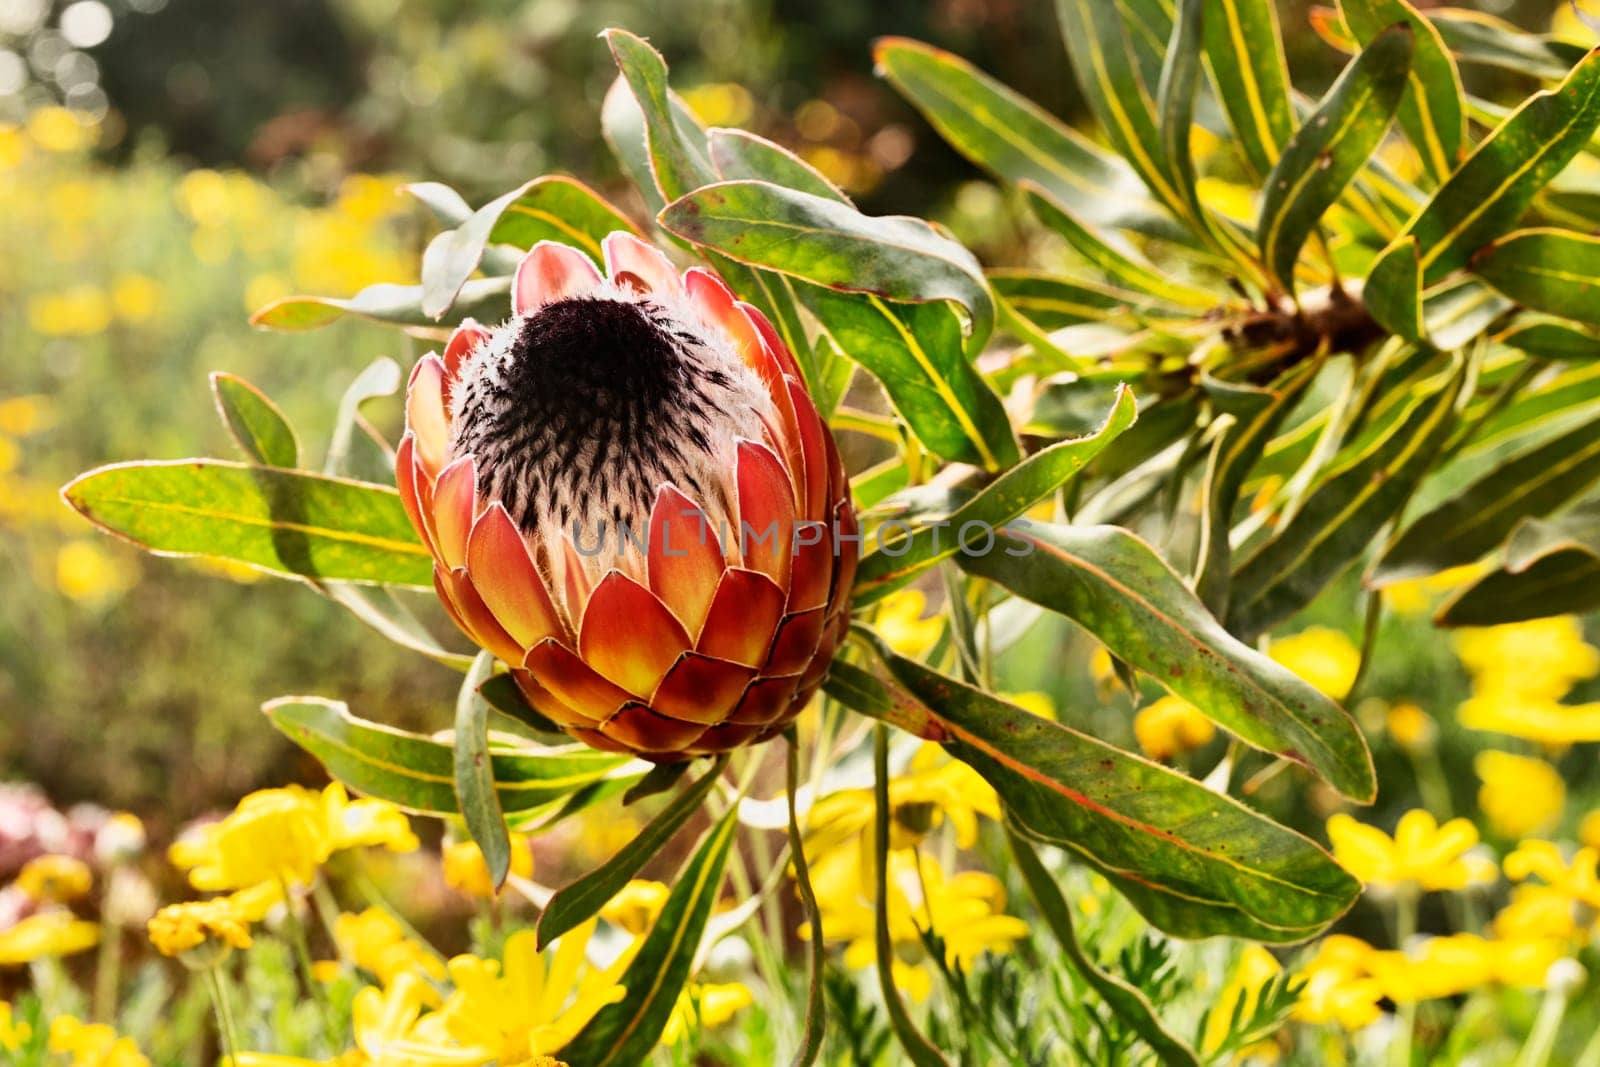 Flower of sugarbush protea flowering plant